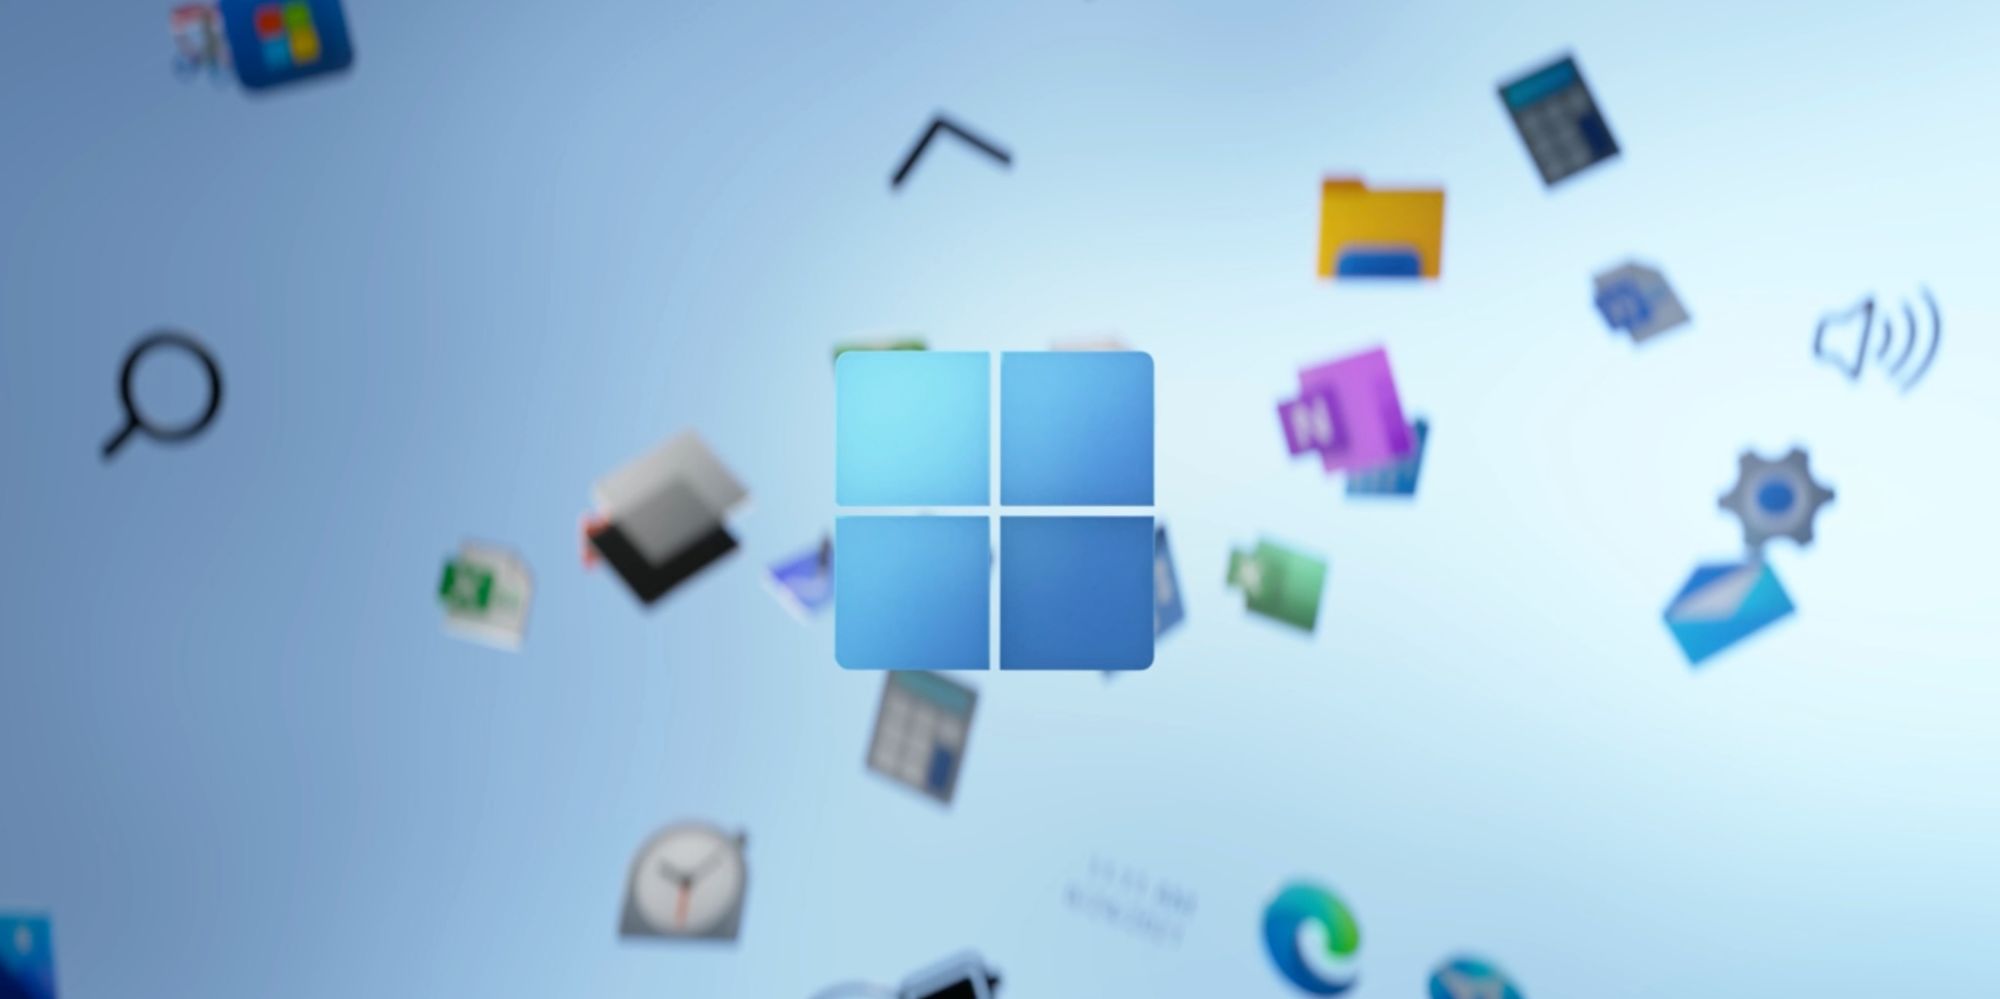 Windows 11 Pictures Icon